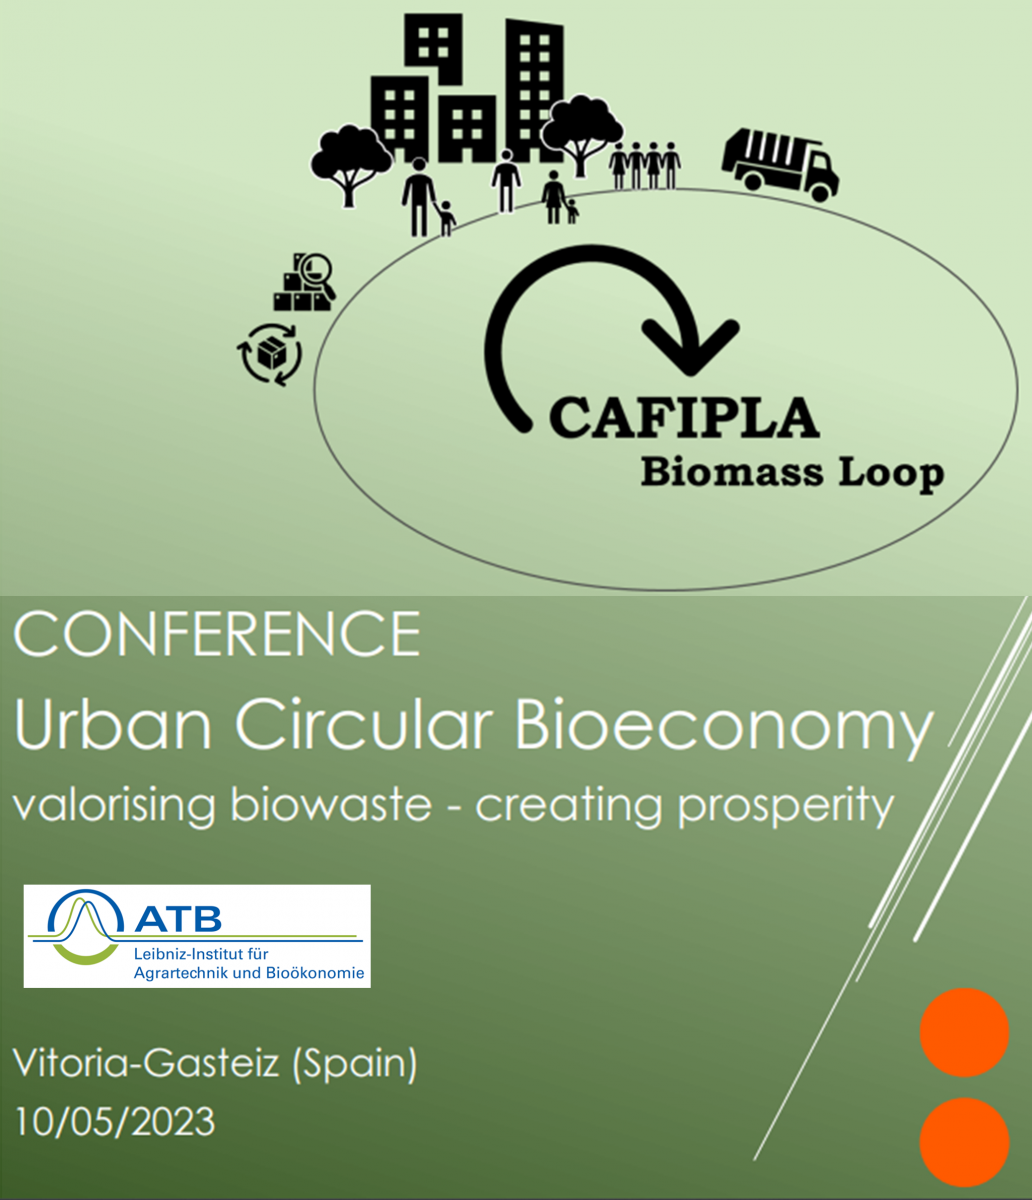 ATB at "Urban Circular Bioeconomy" conference